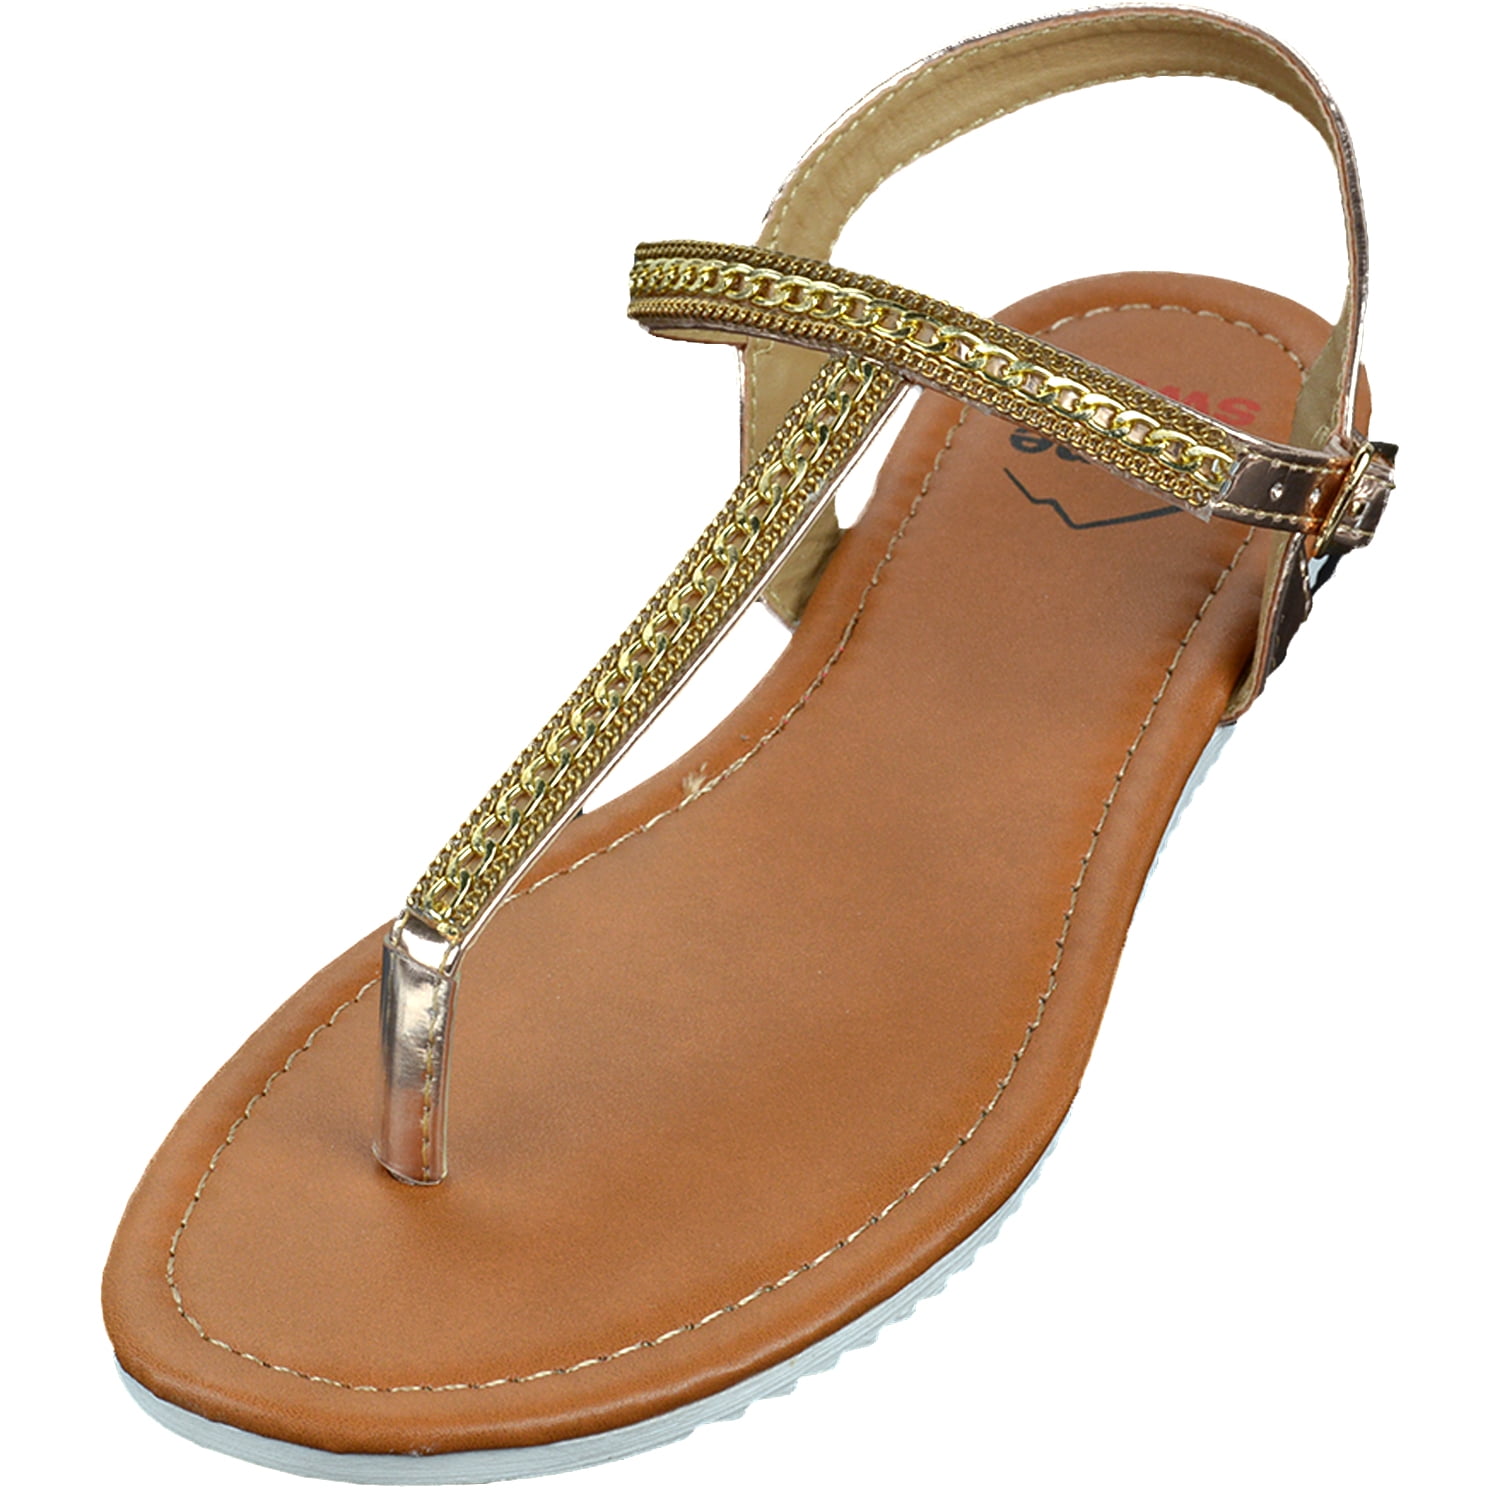 dressy gold flat sandals